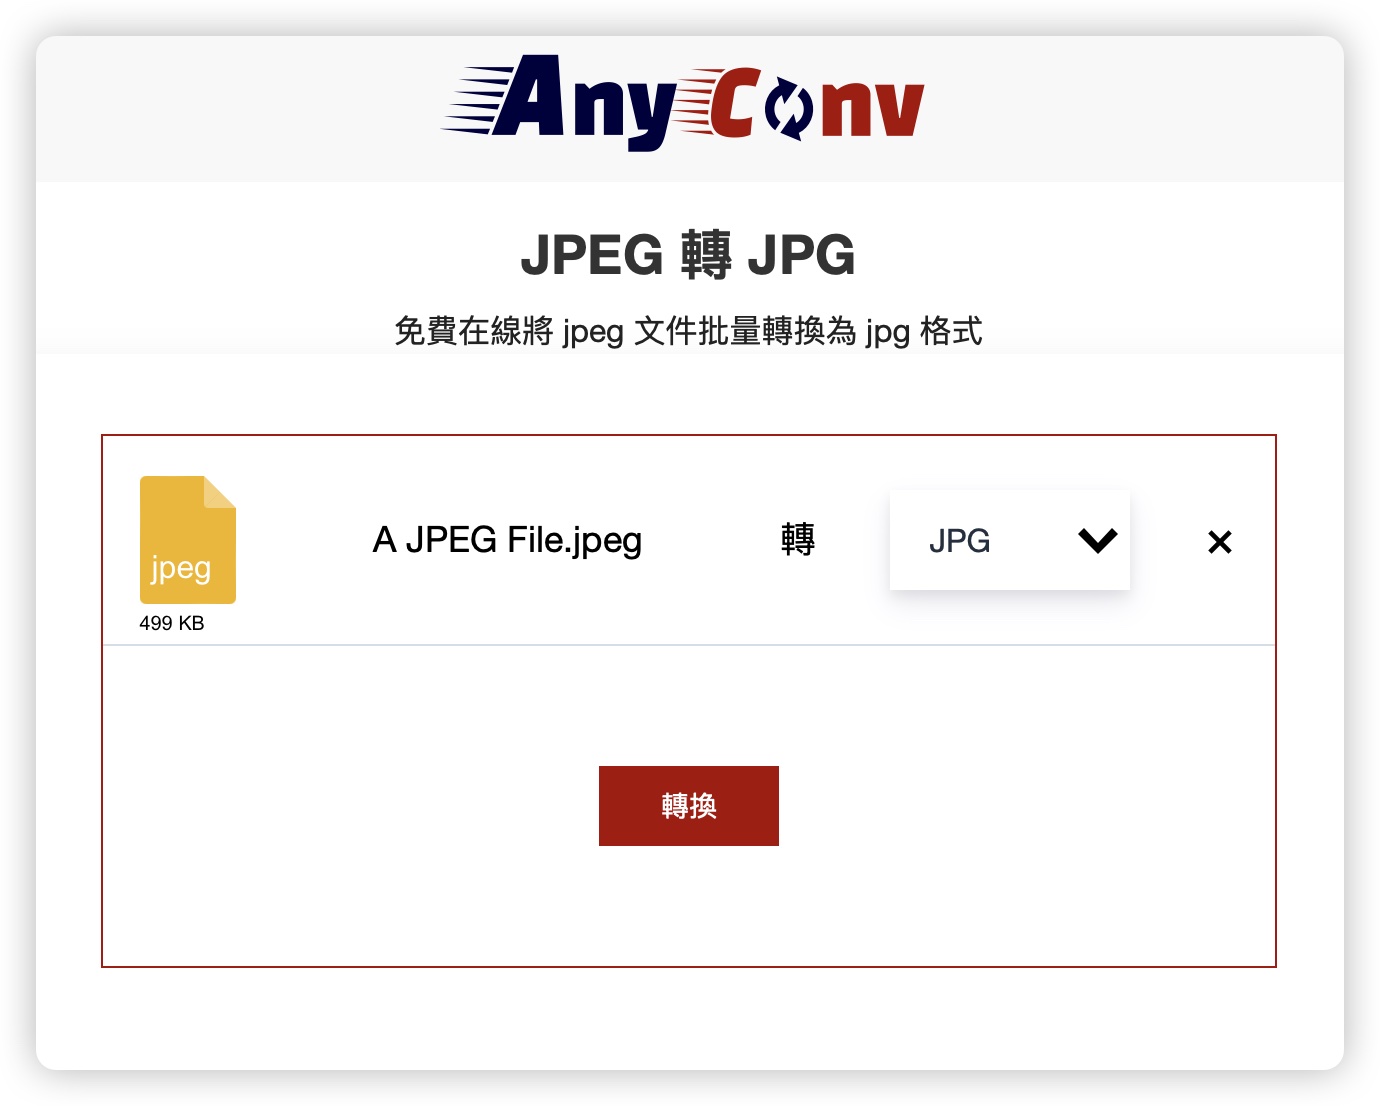 JPEG JPG 差別 JPG 轉檔 JPG